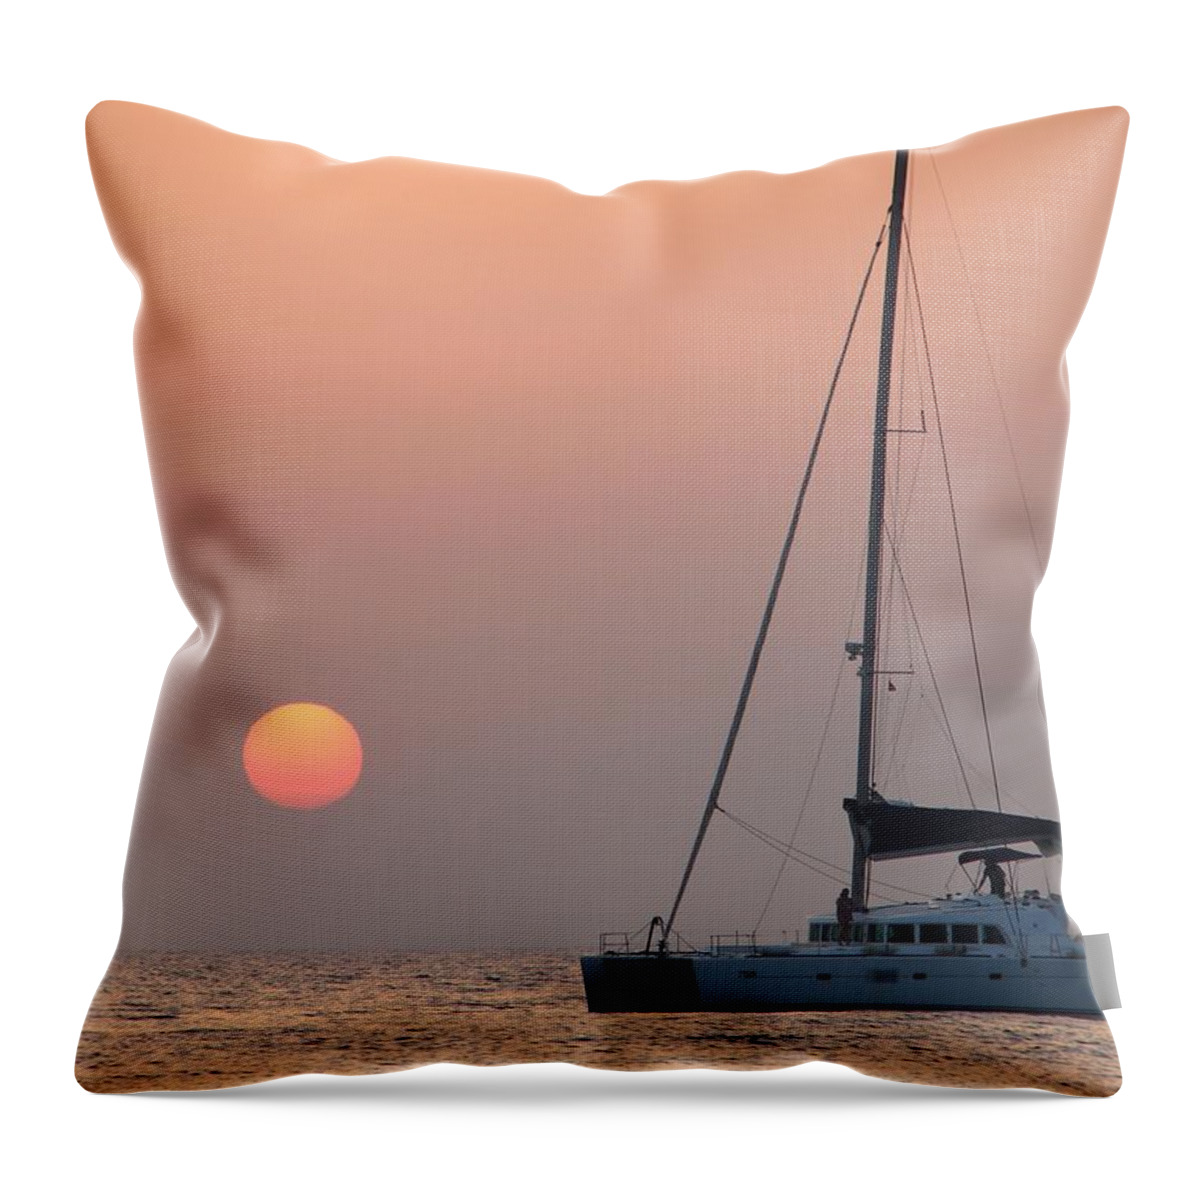 Ship Throw Pillow featuring the photograph Mallorca 3 by Ana Maria Edulescu